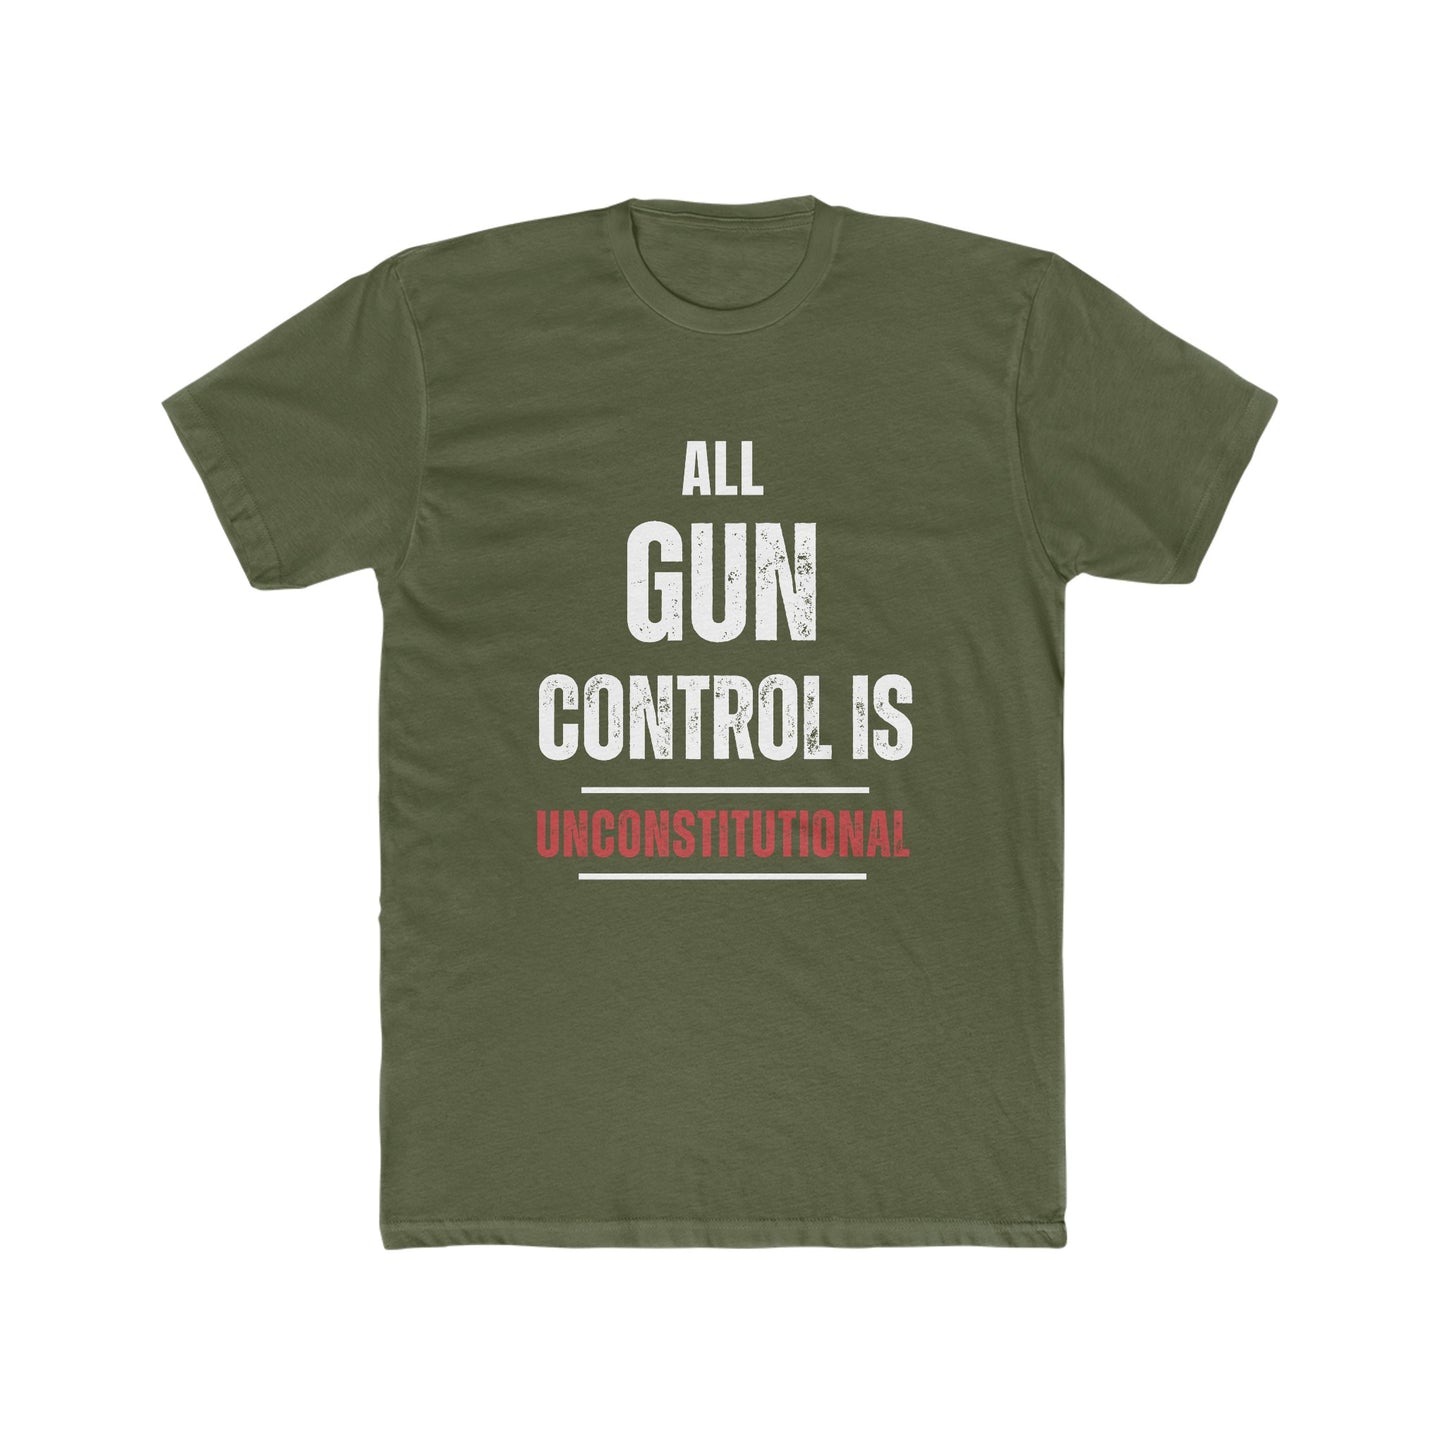 All Gun Control Is Unconstitutional T-Shirt